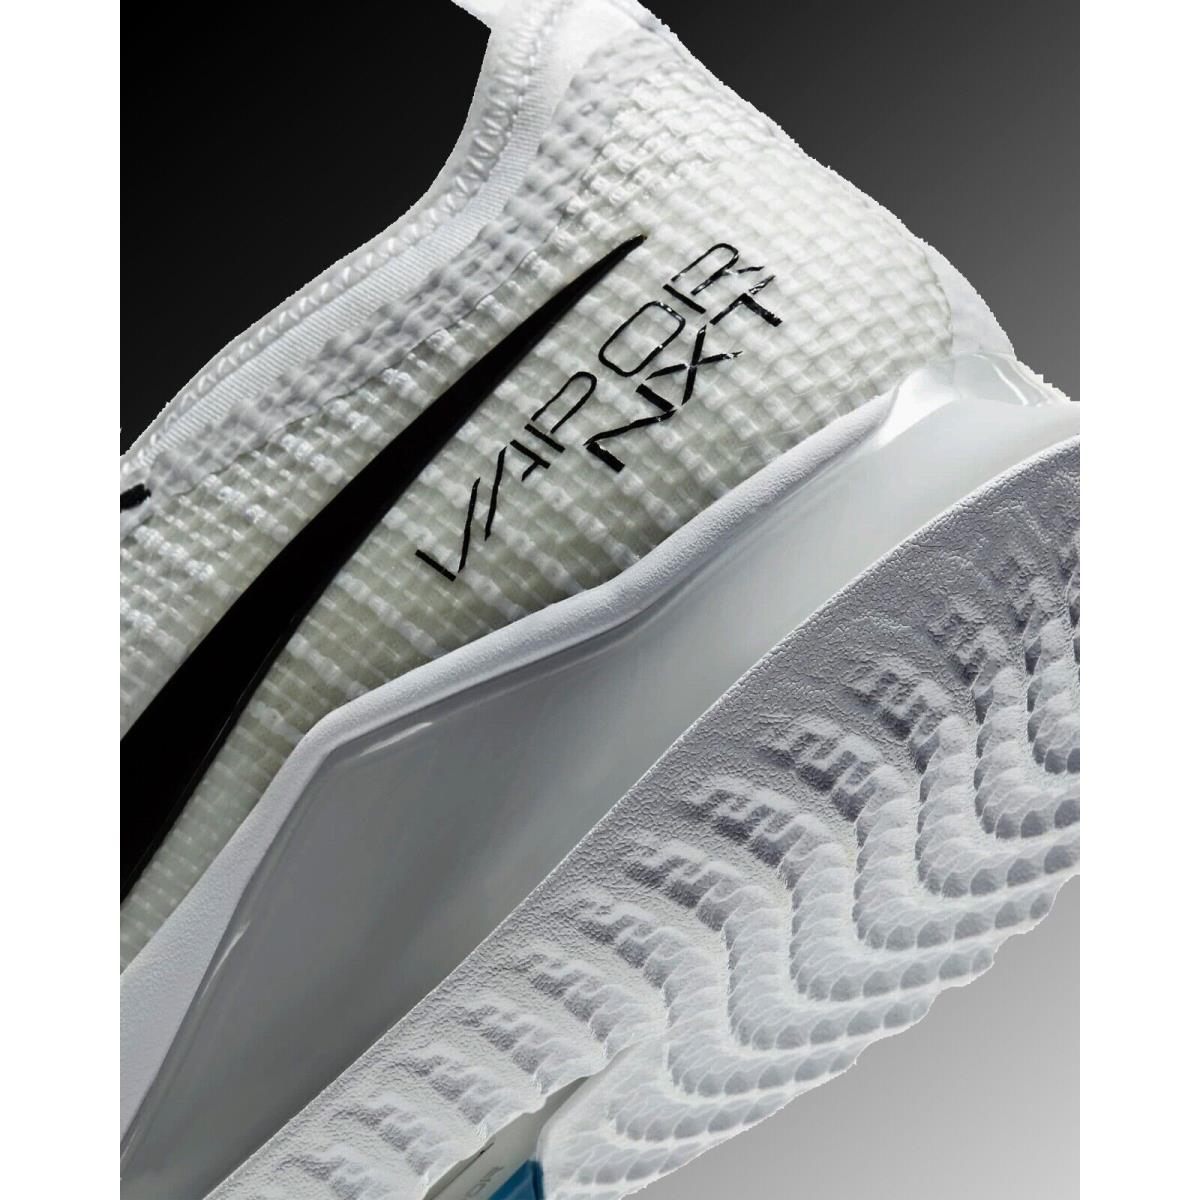 Nike shoes  - White, Black-Grey Fog 6